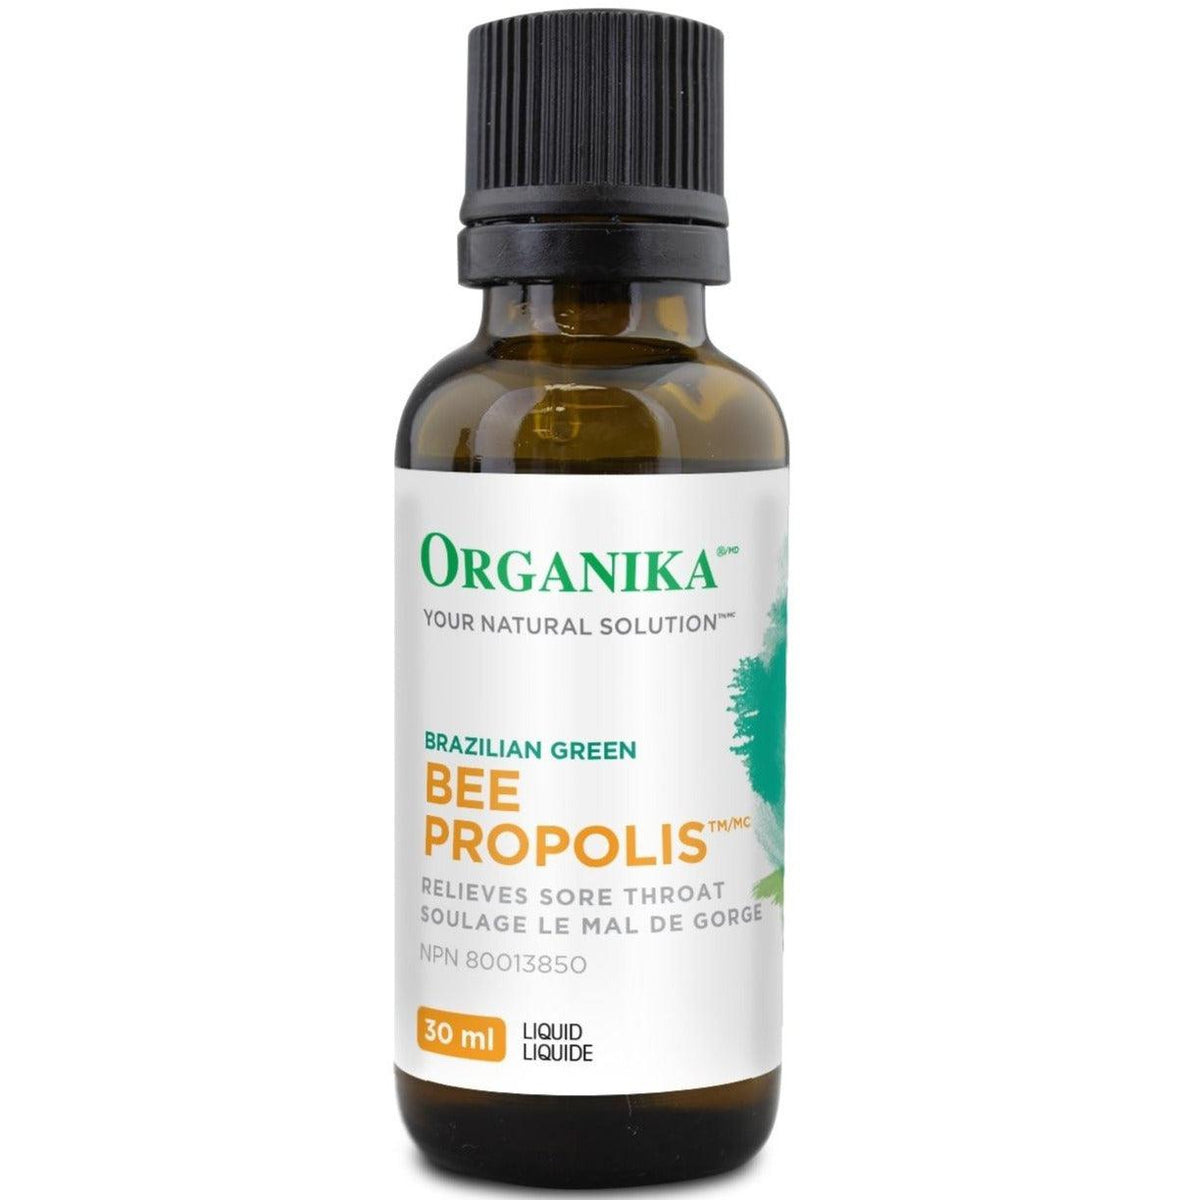 Organika Bee Propolis Liquid with Alcohol 30mL Cough, Cold & Flu at Village Vitamin Store